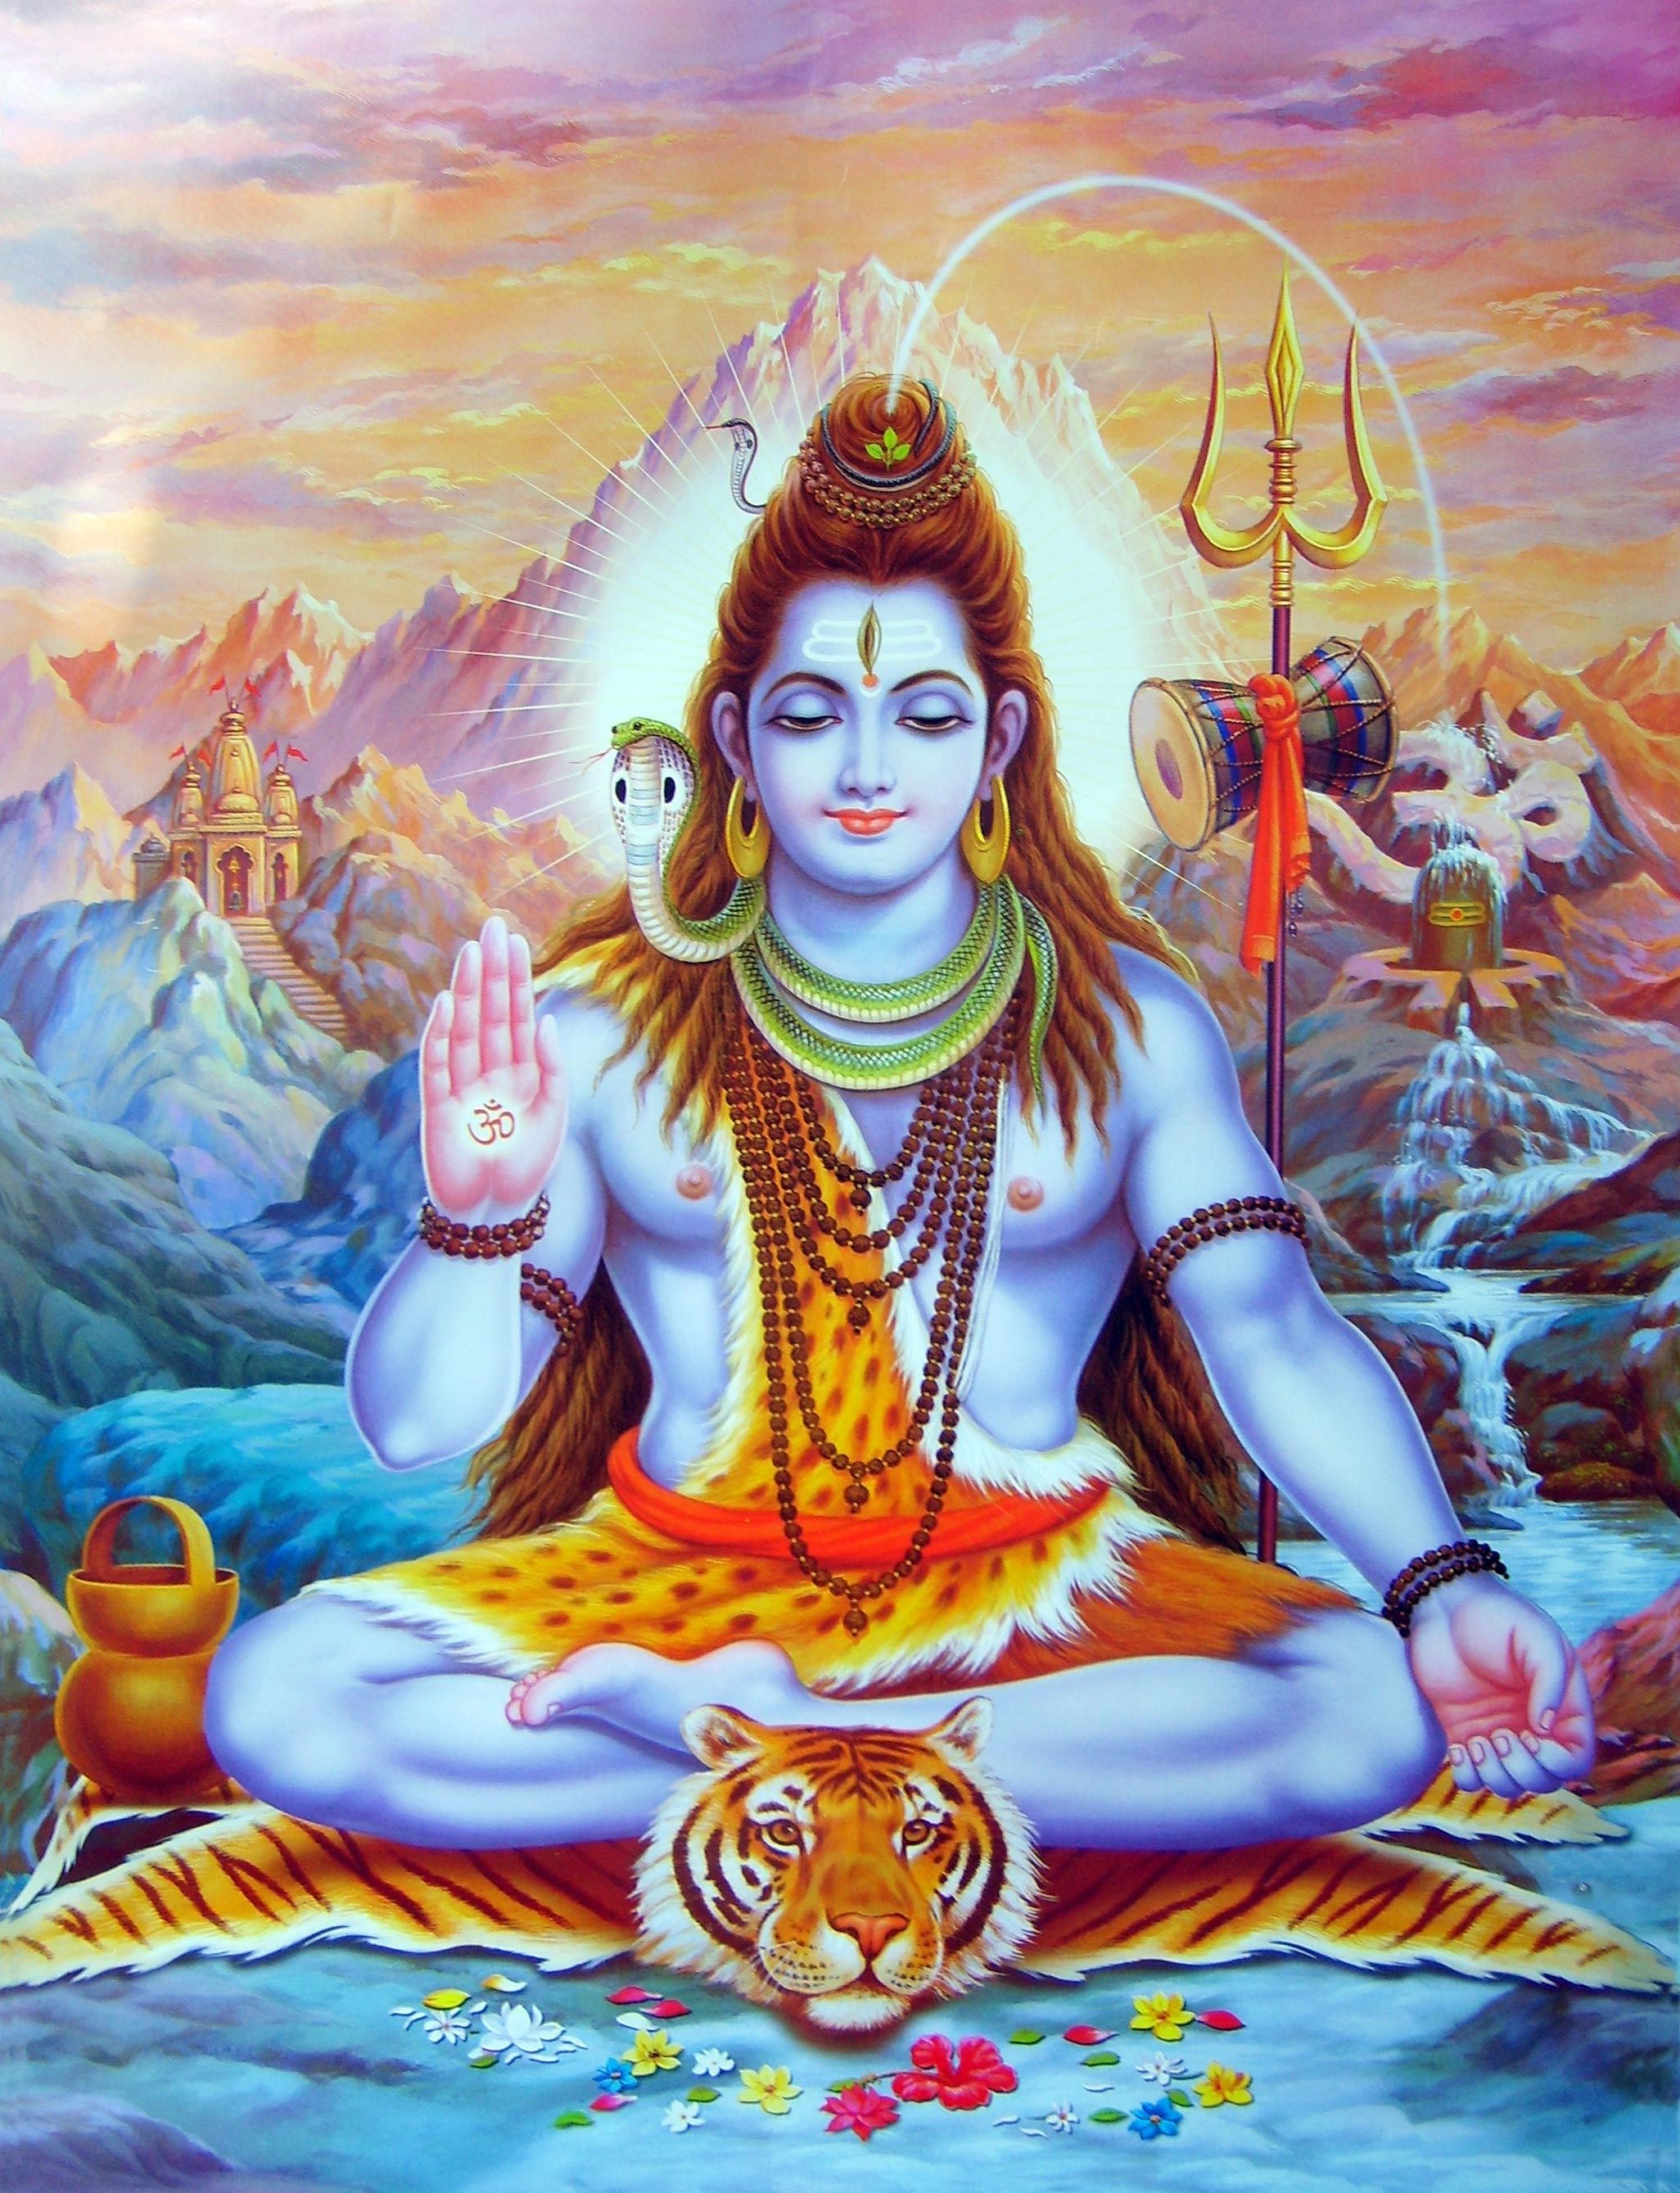 Download Wallpaper, Download snakes hinduism shiva meditation